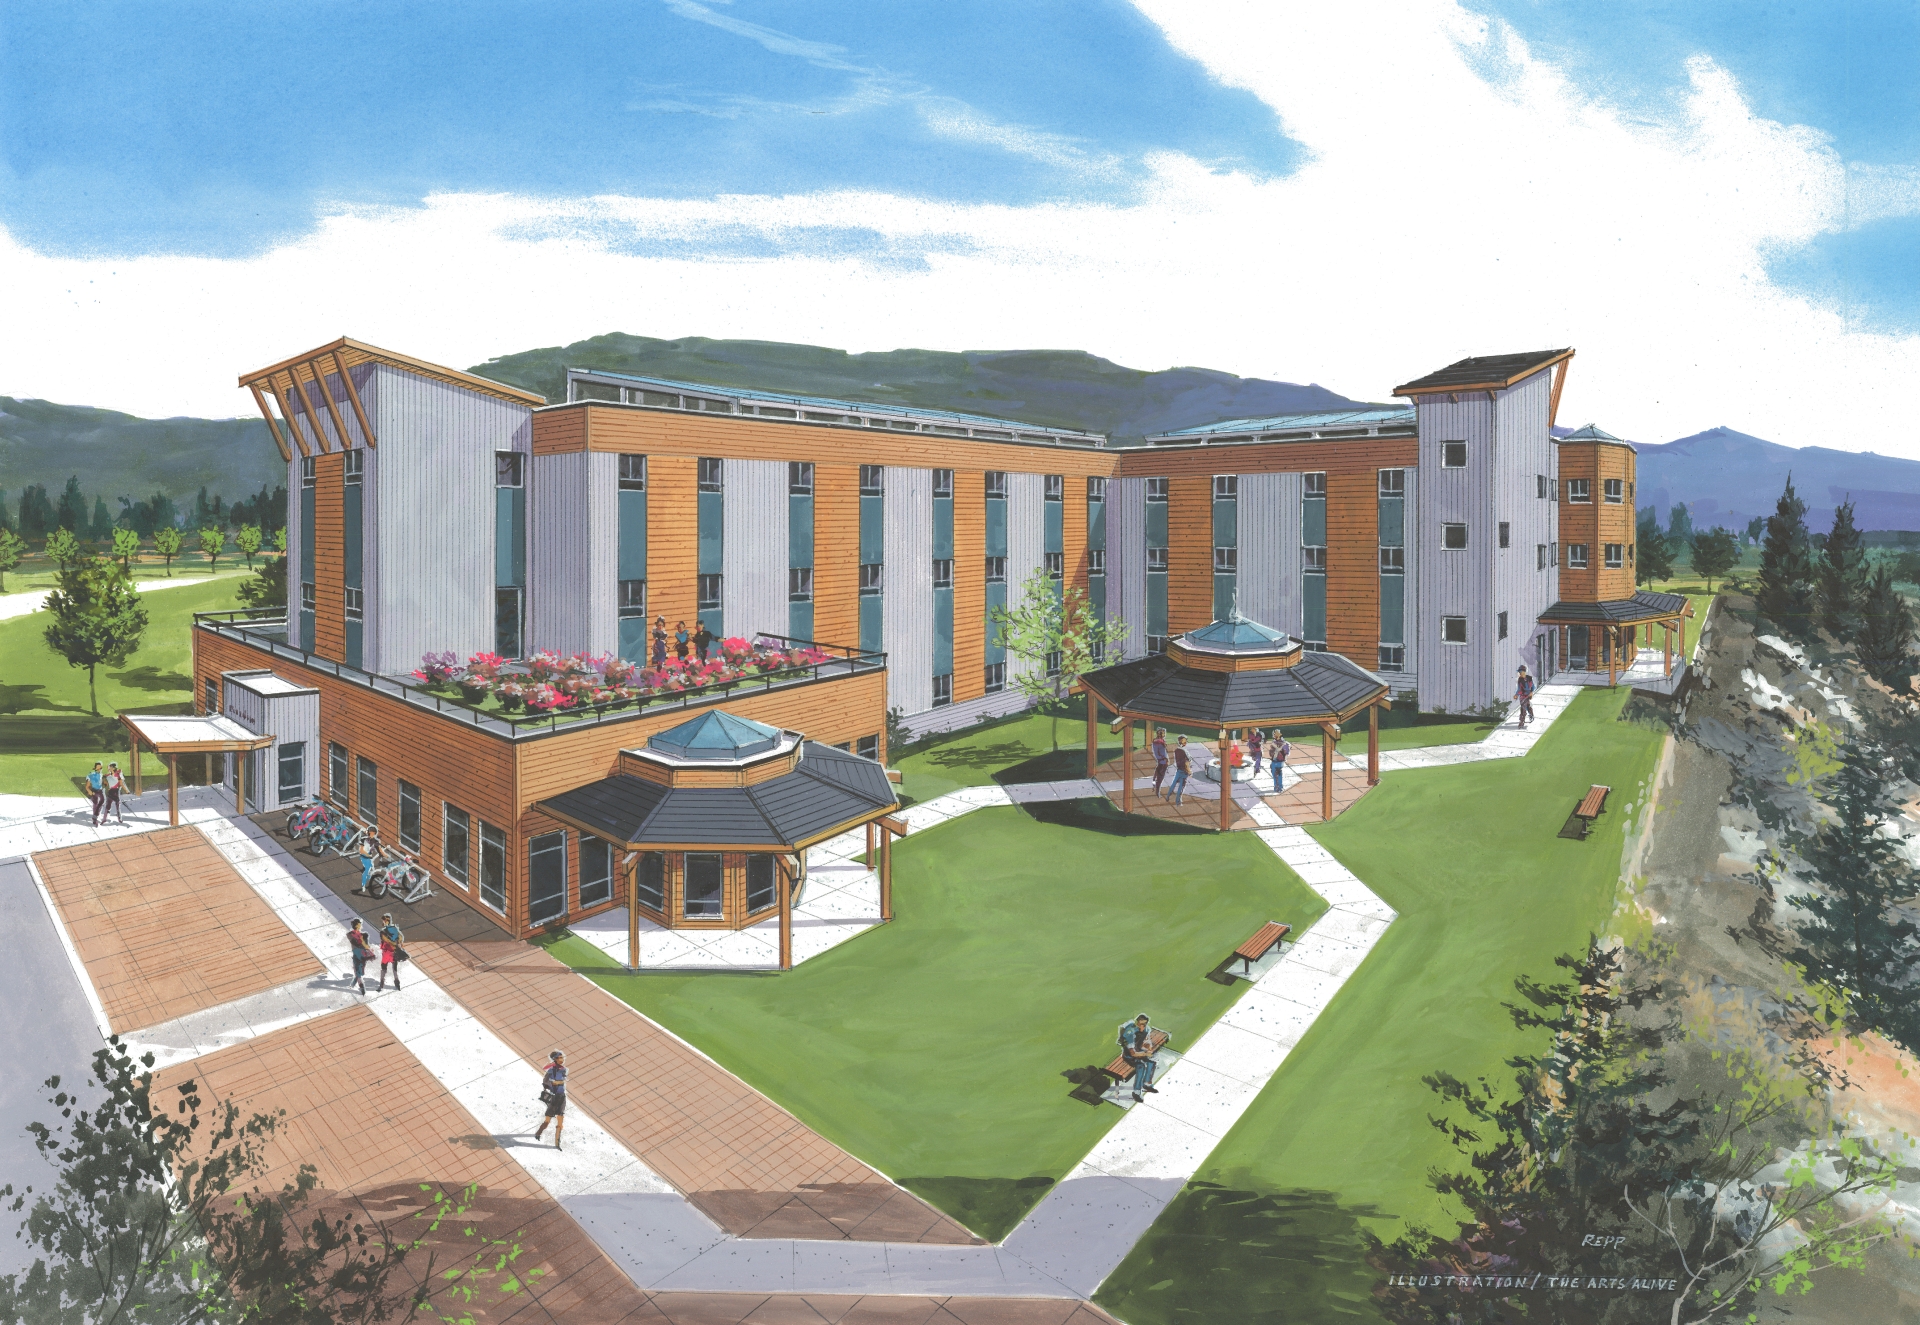 Selkirk College housing proposals promise big benefits for Castlegar/Nelson